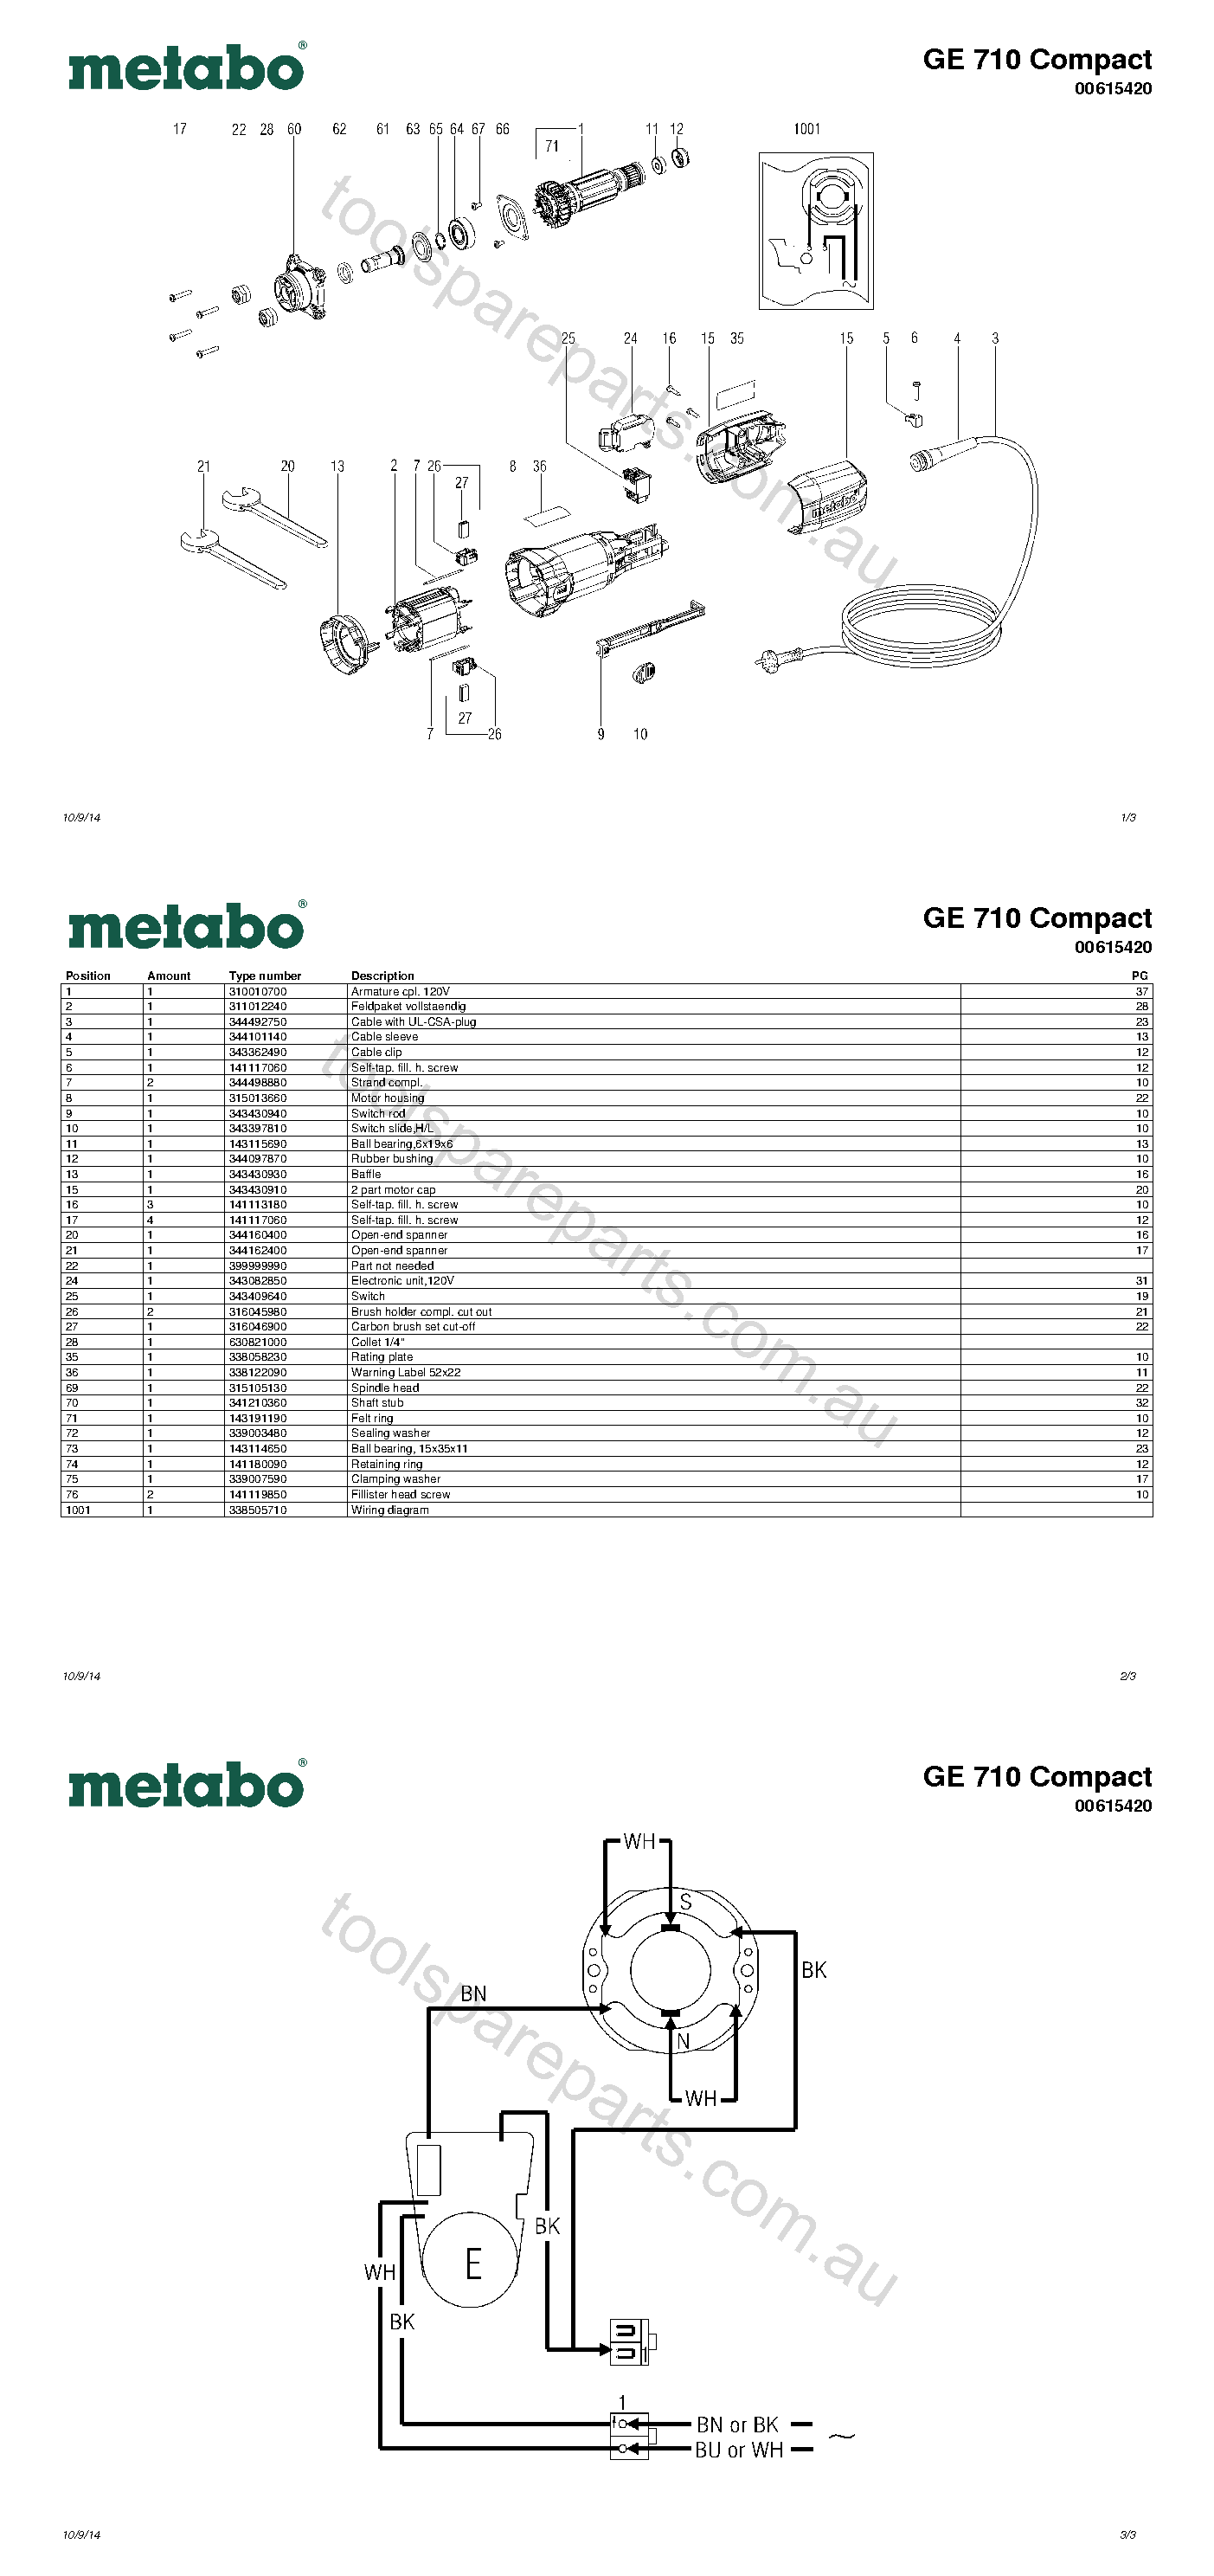 Metabo GE 710 Compact 00615420  Diagram 1